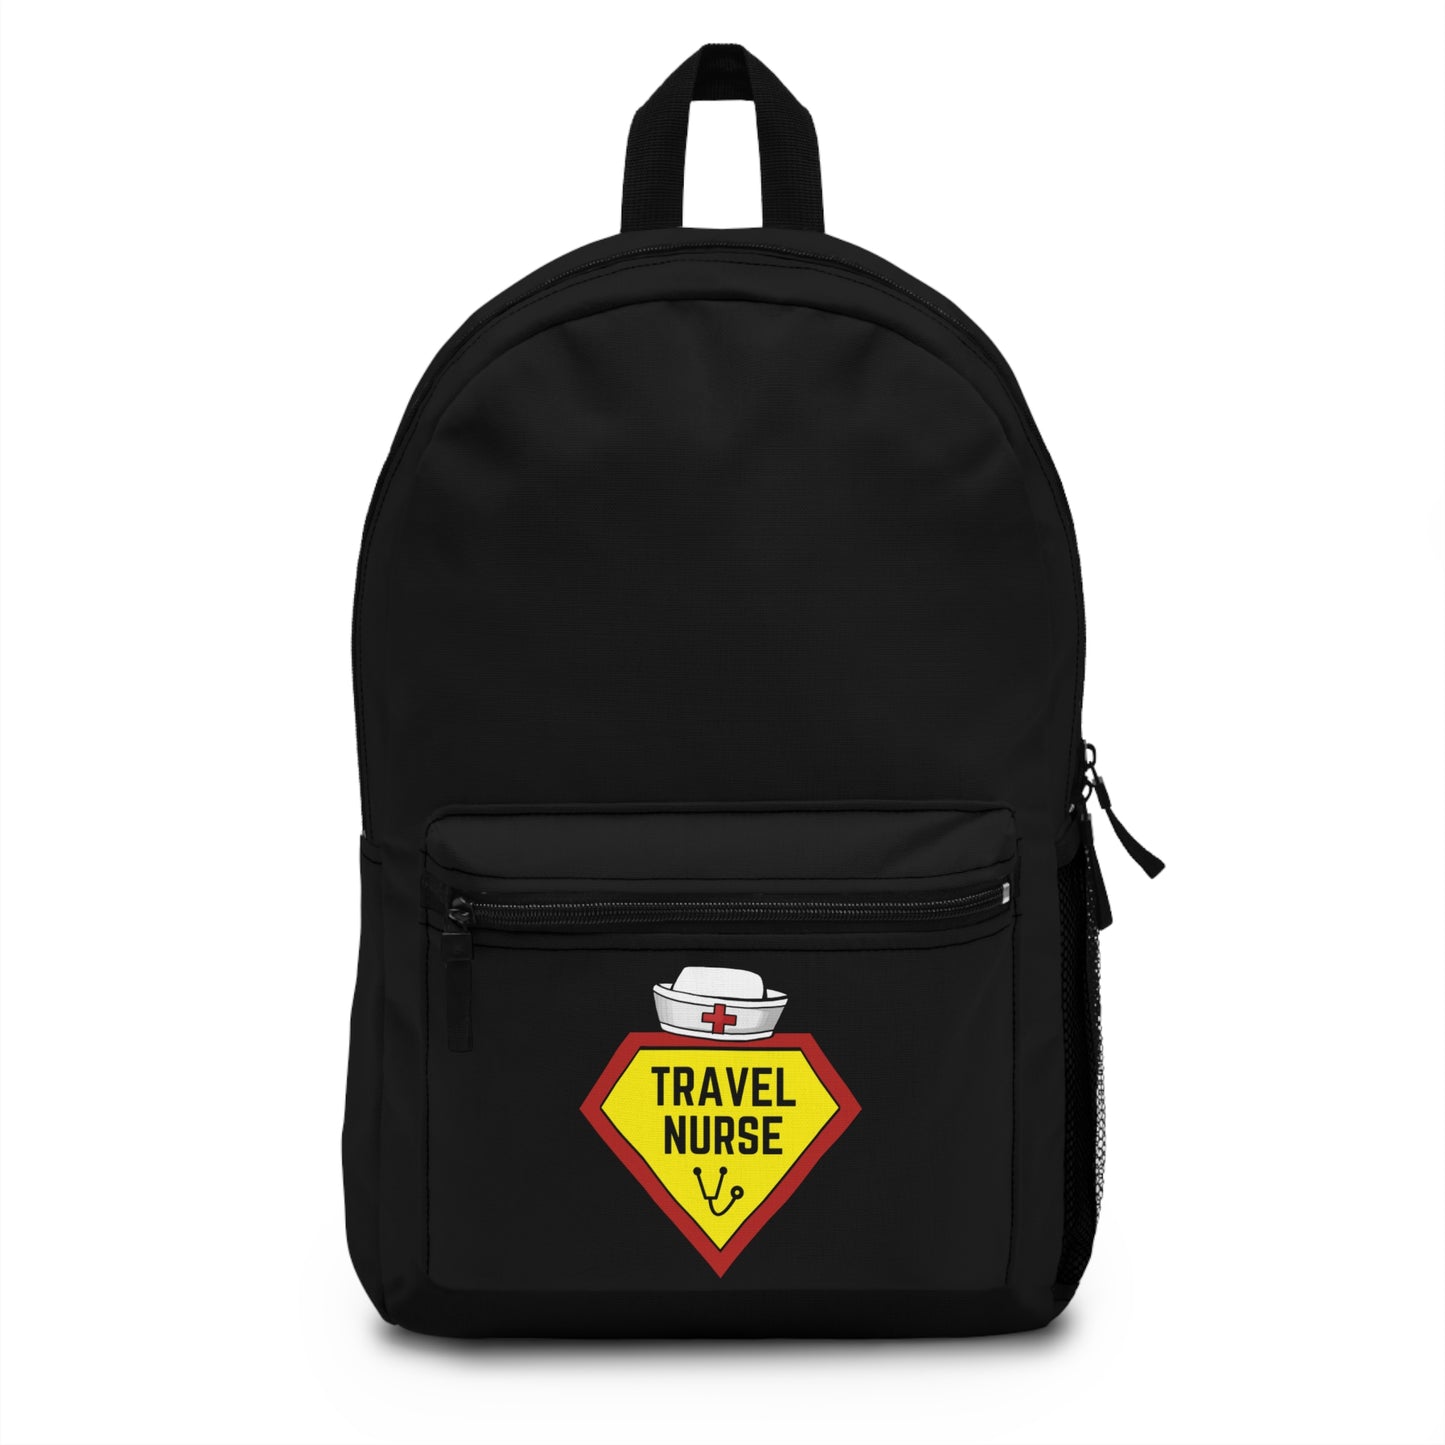 Travel Nurse Backpack